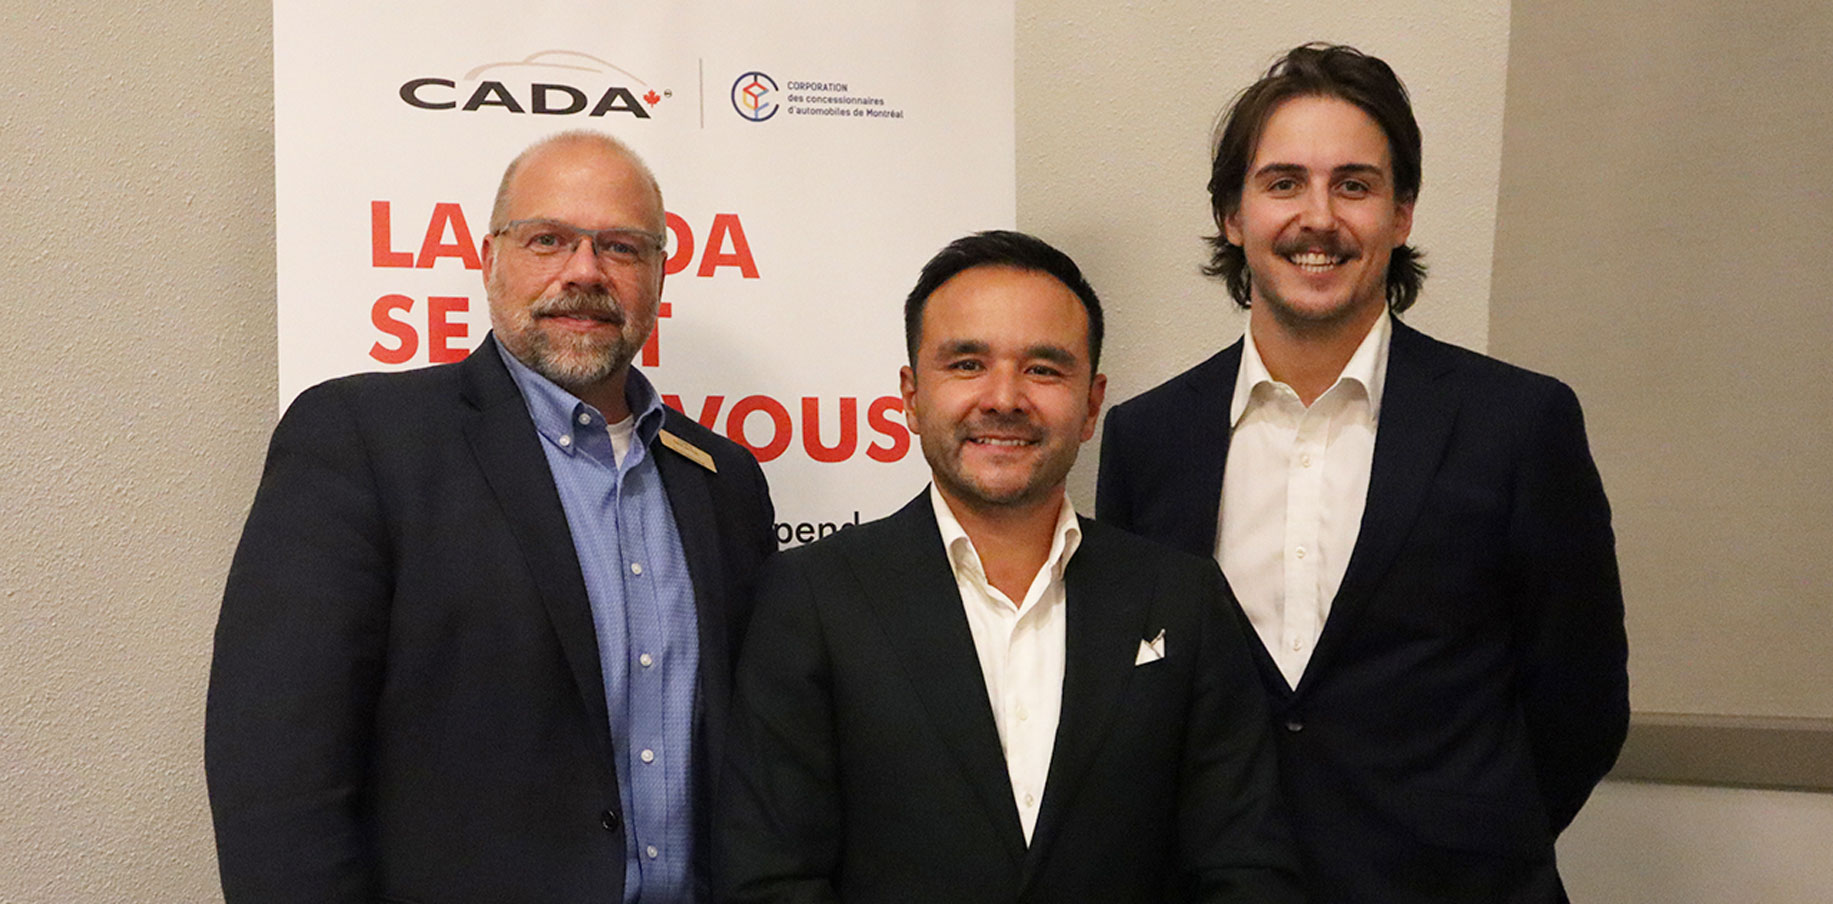 CADA joins panel at Québec dealer association event